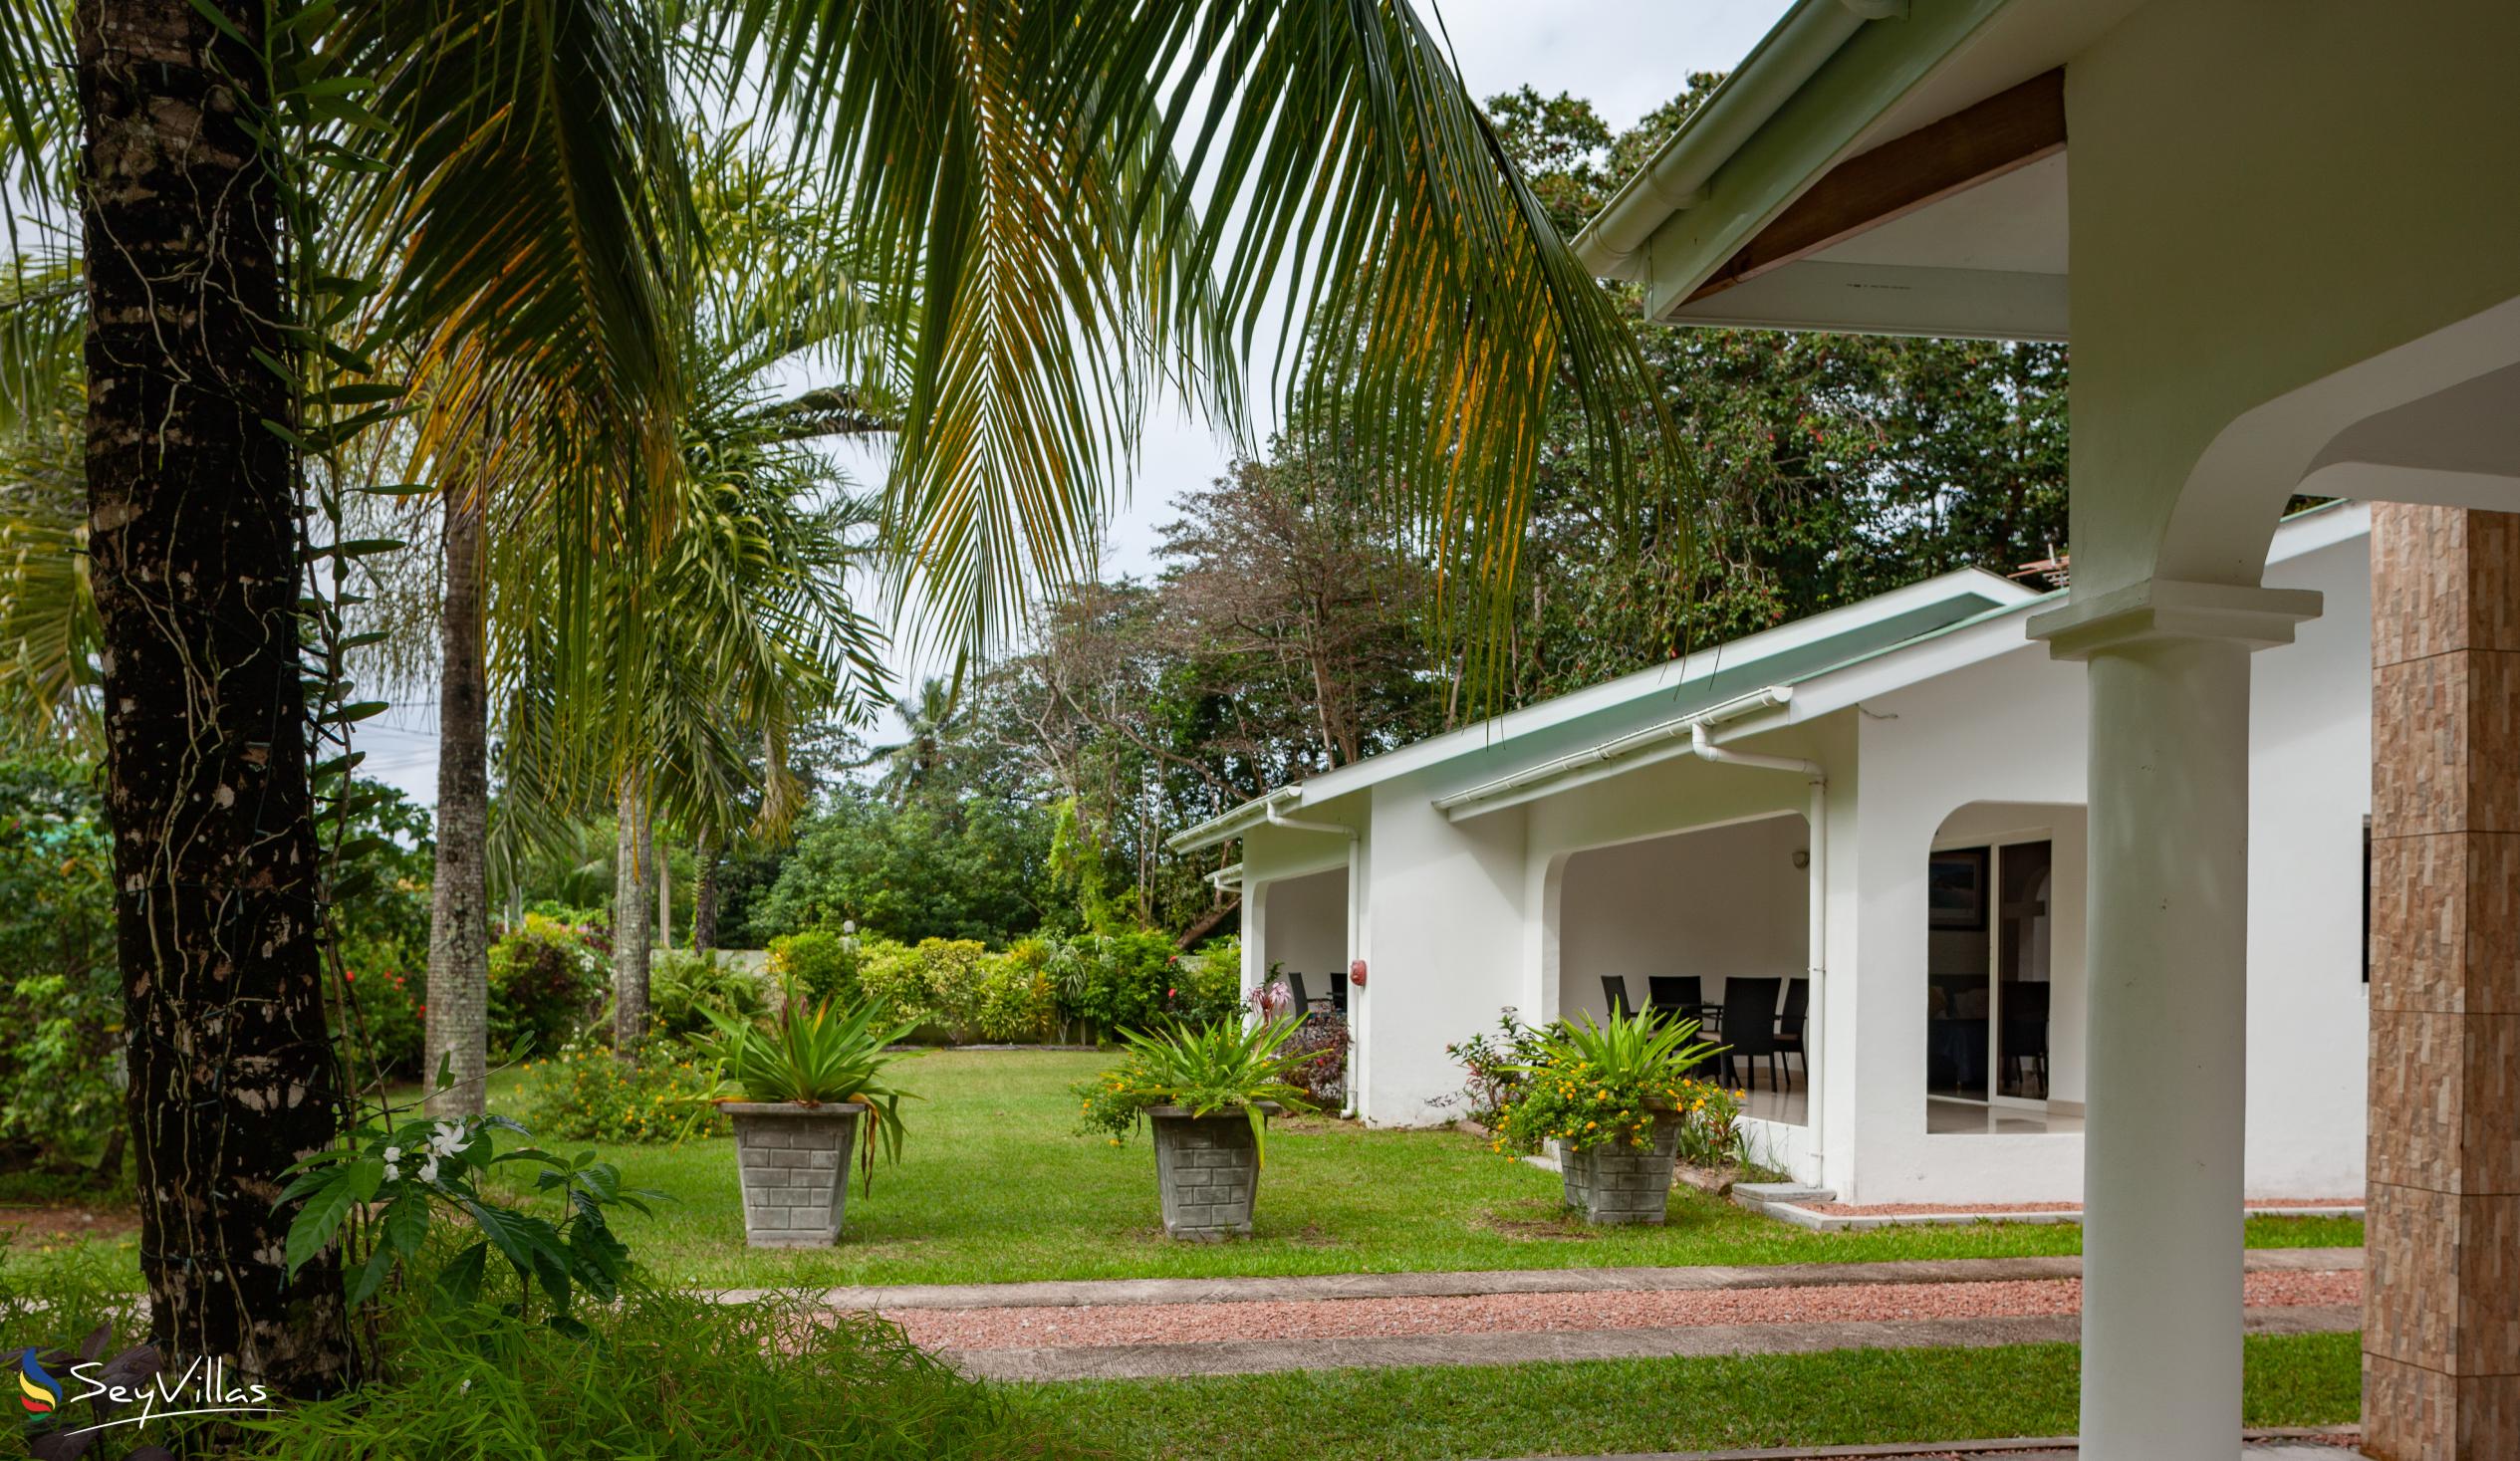 Photo 66: La Modestie Villa - Outdoor area - Praslin (Seychelles)